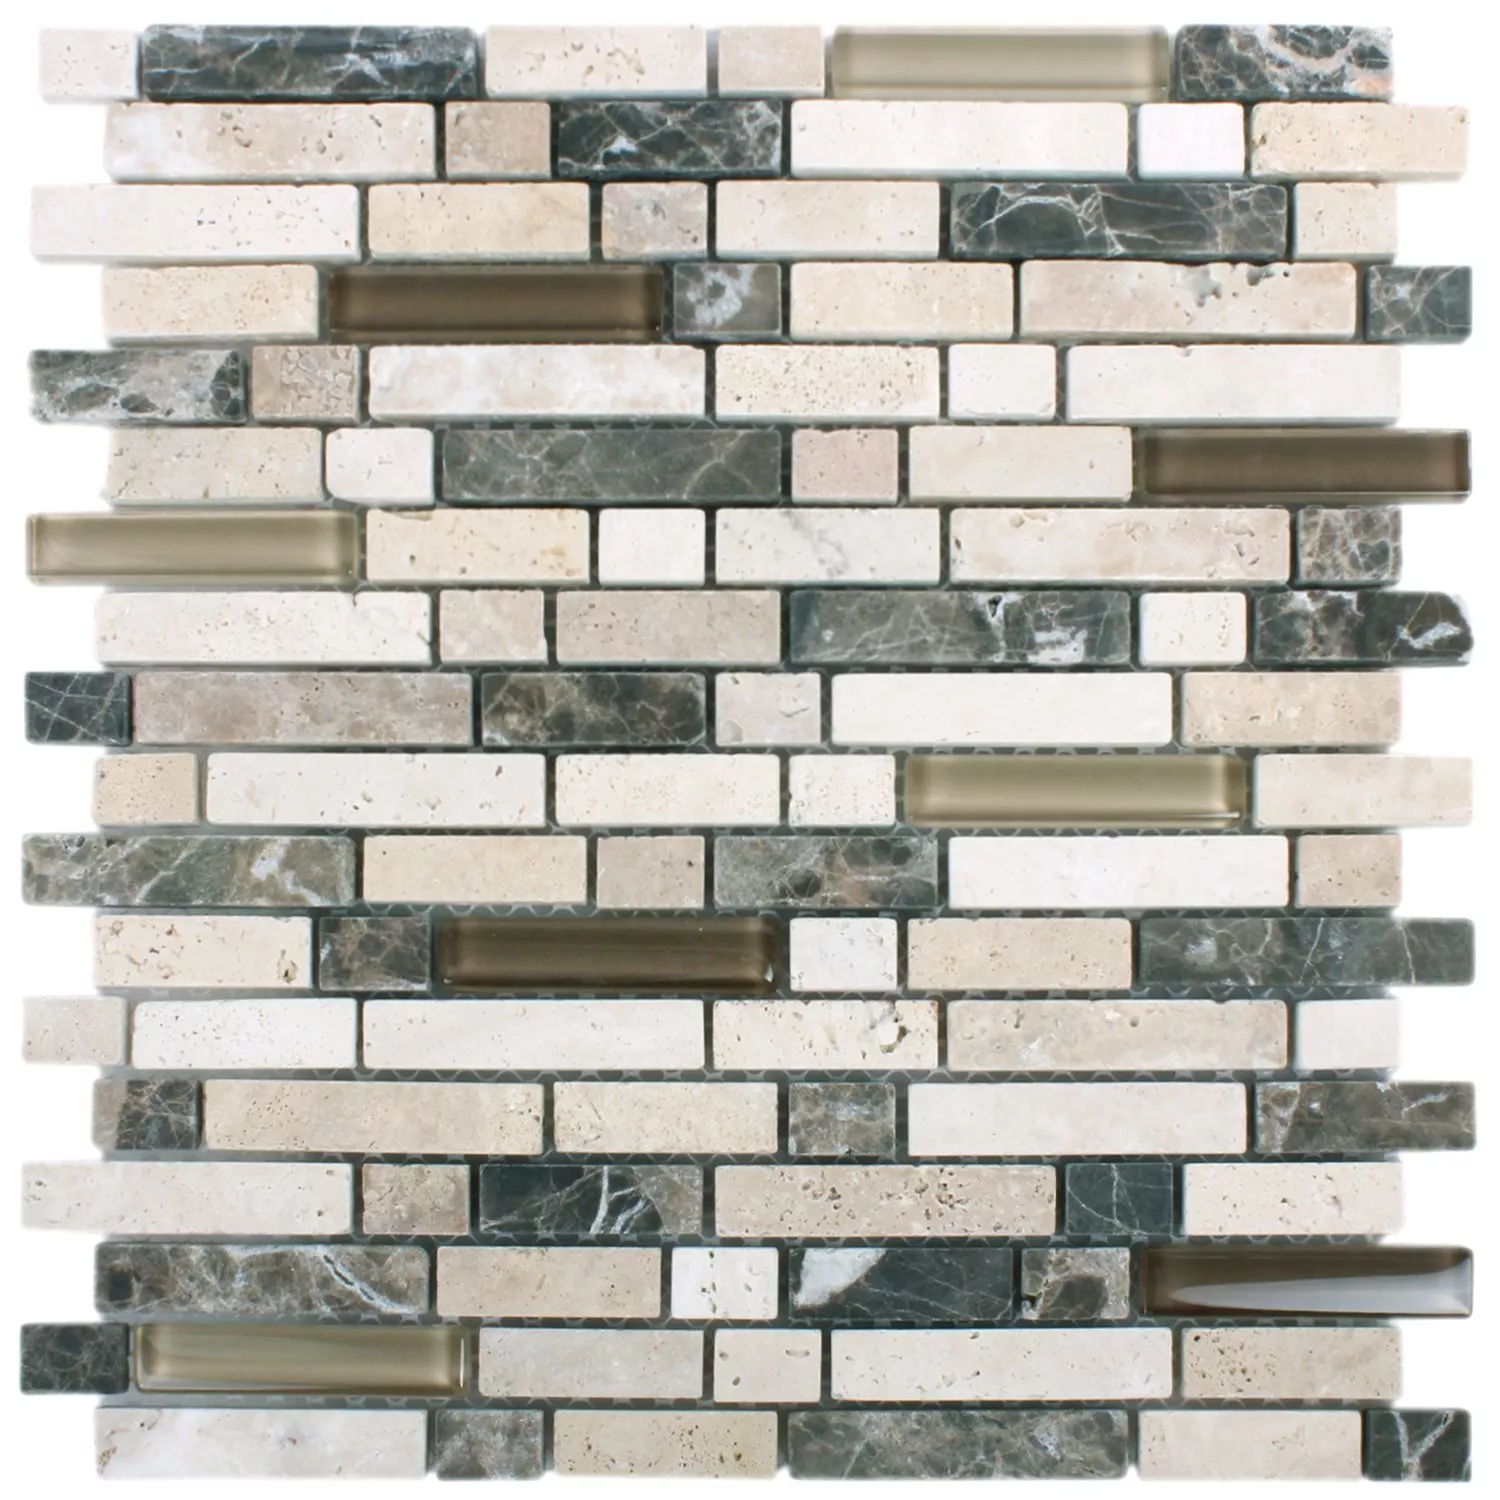 Sample Mosaic Tiles Milos Glass Natural Stone Mix Brown Beige Pattern